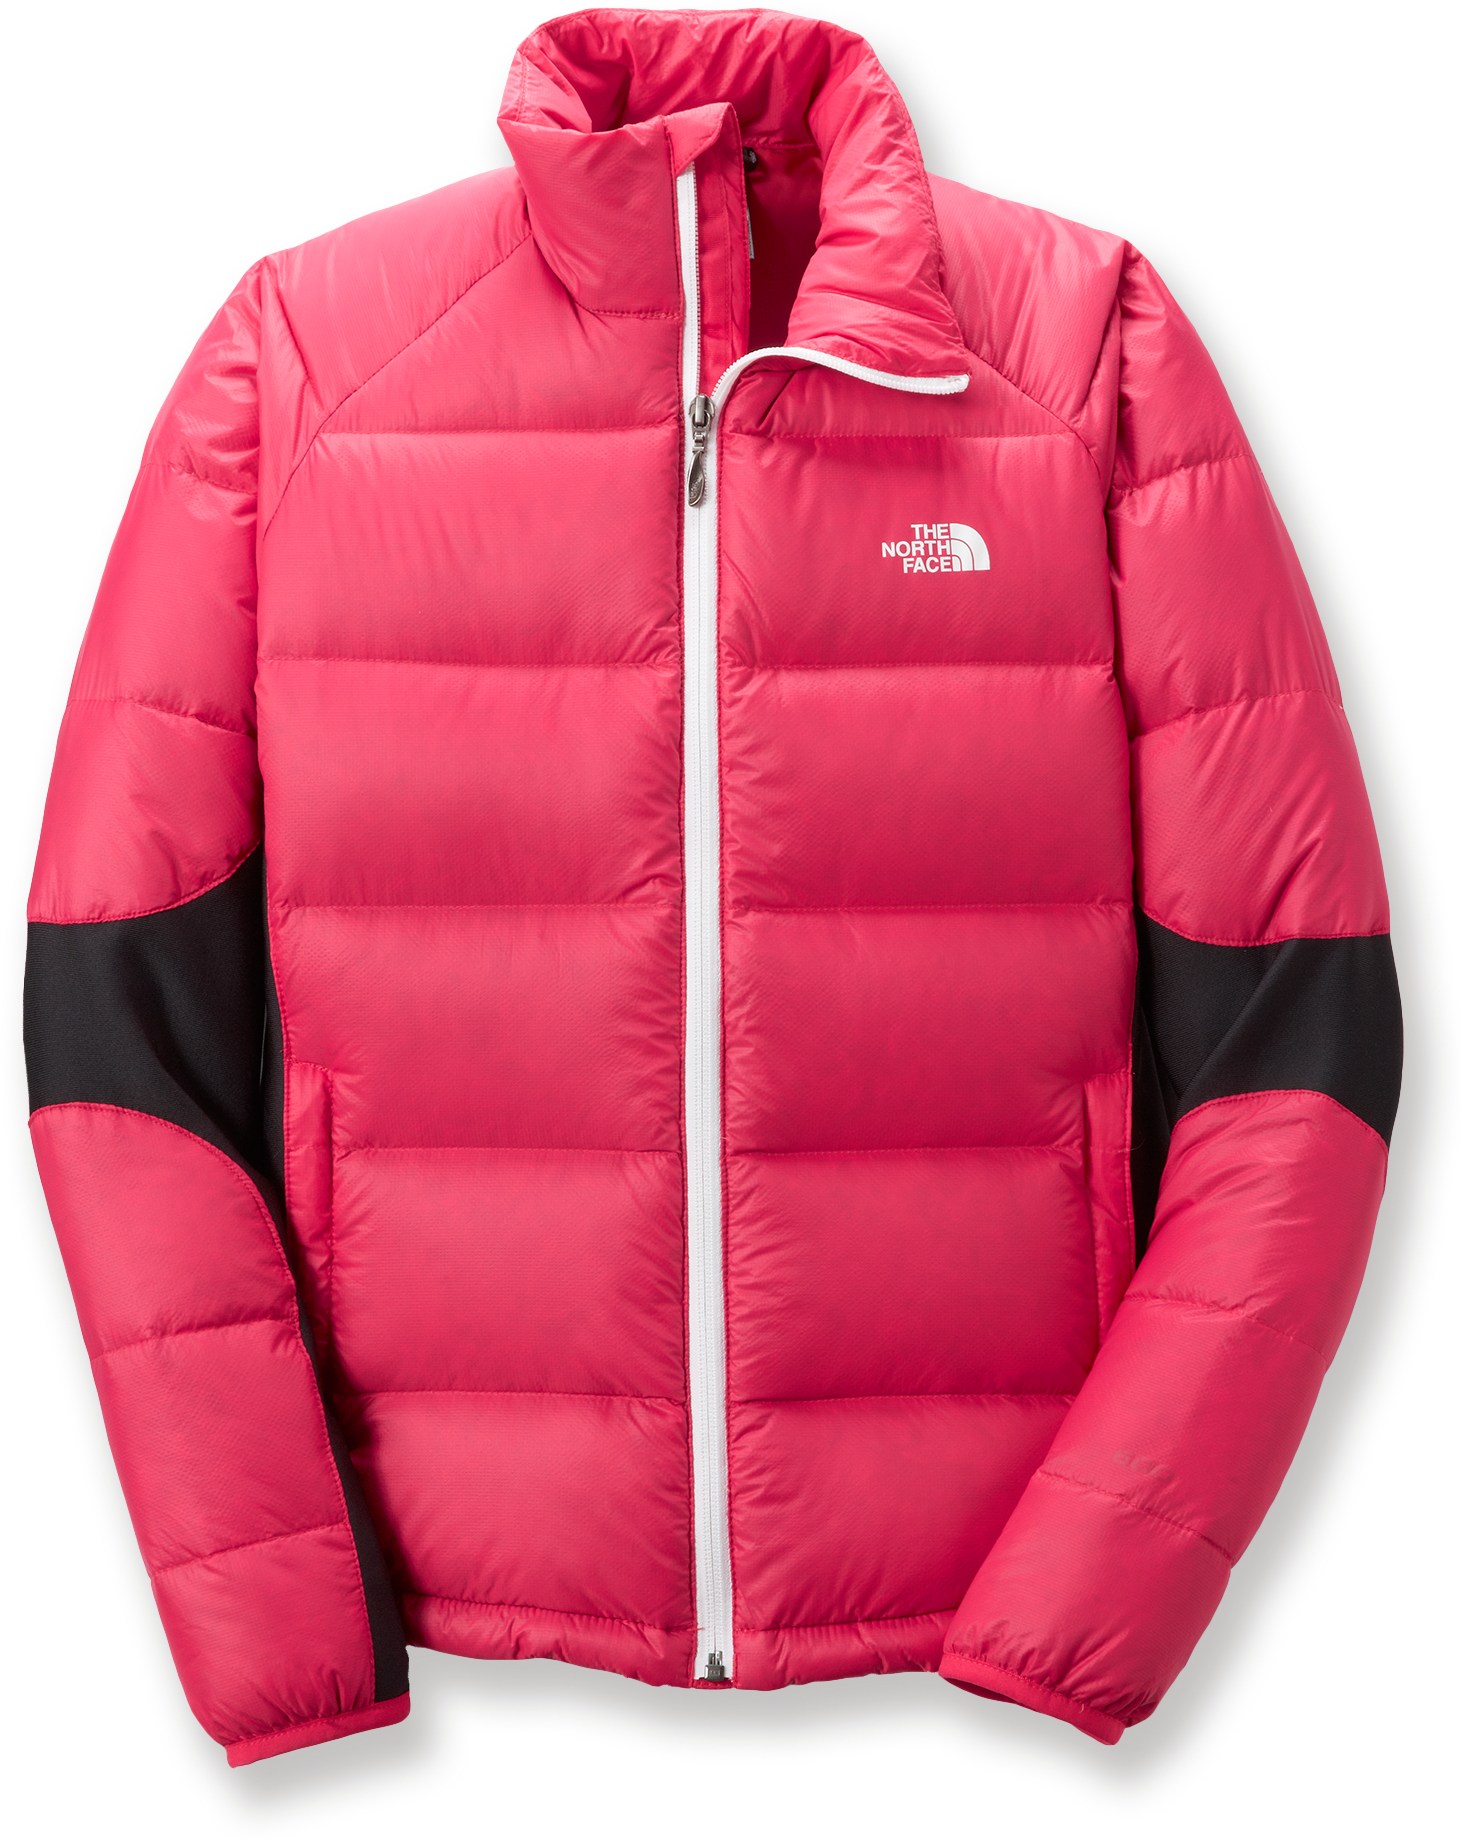 REI North Face Women's Crimptastic Hybrid Down Jacket - $98.73, Shipped